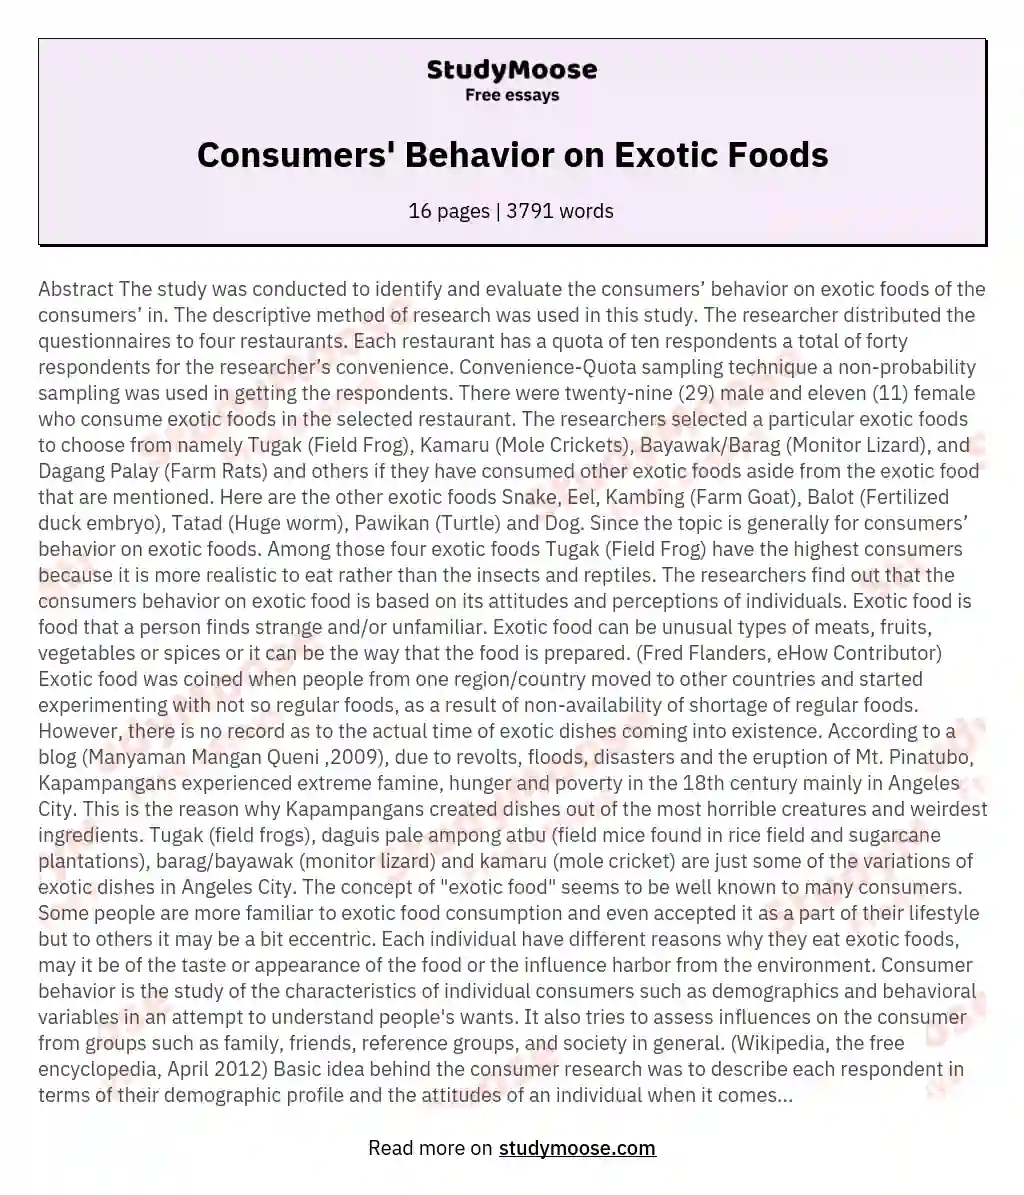 Consumers' Behavior on Exotic Foods essay